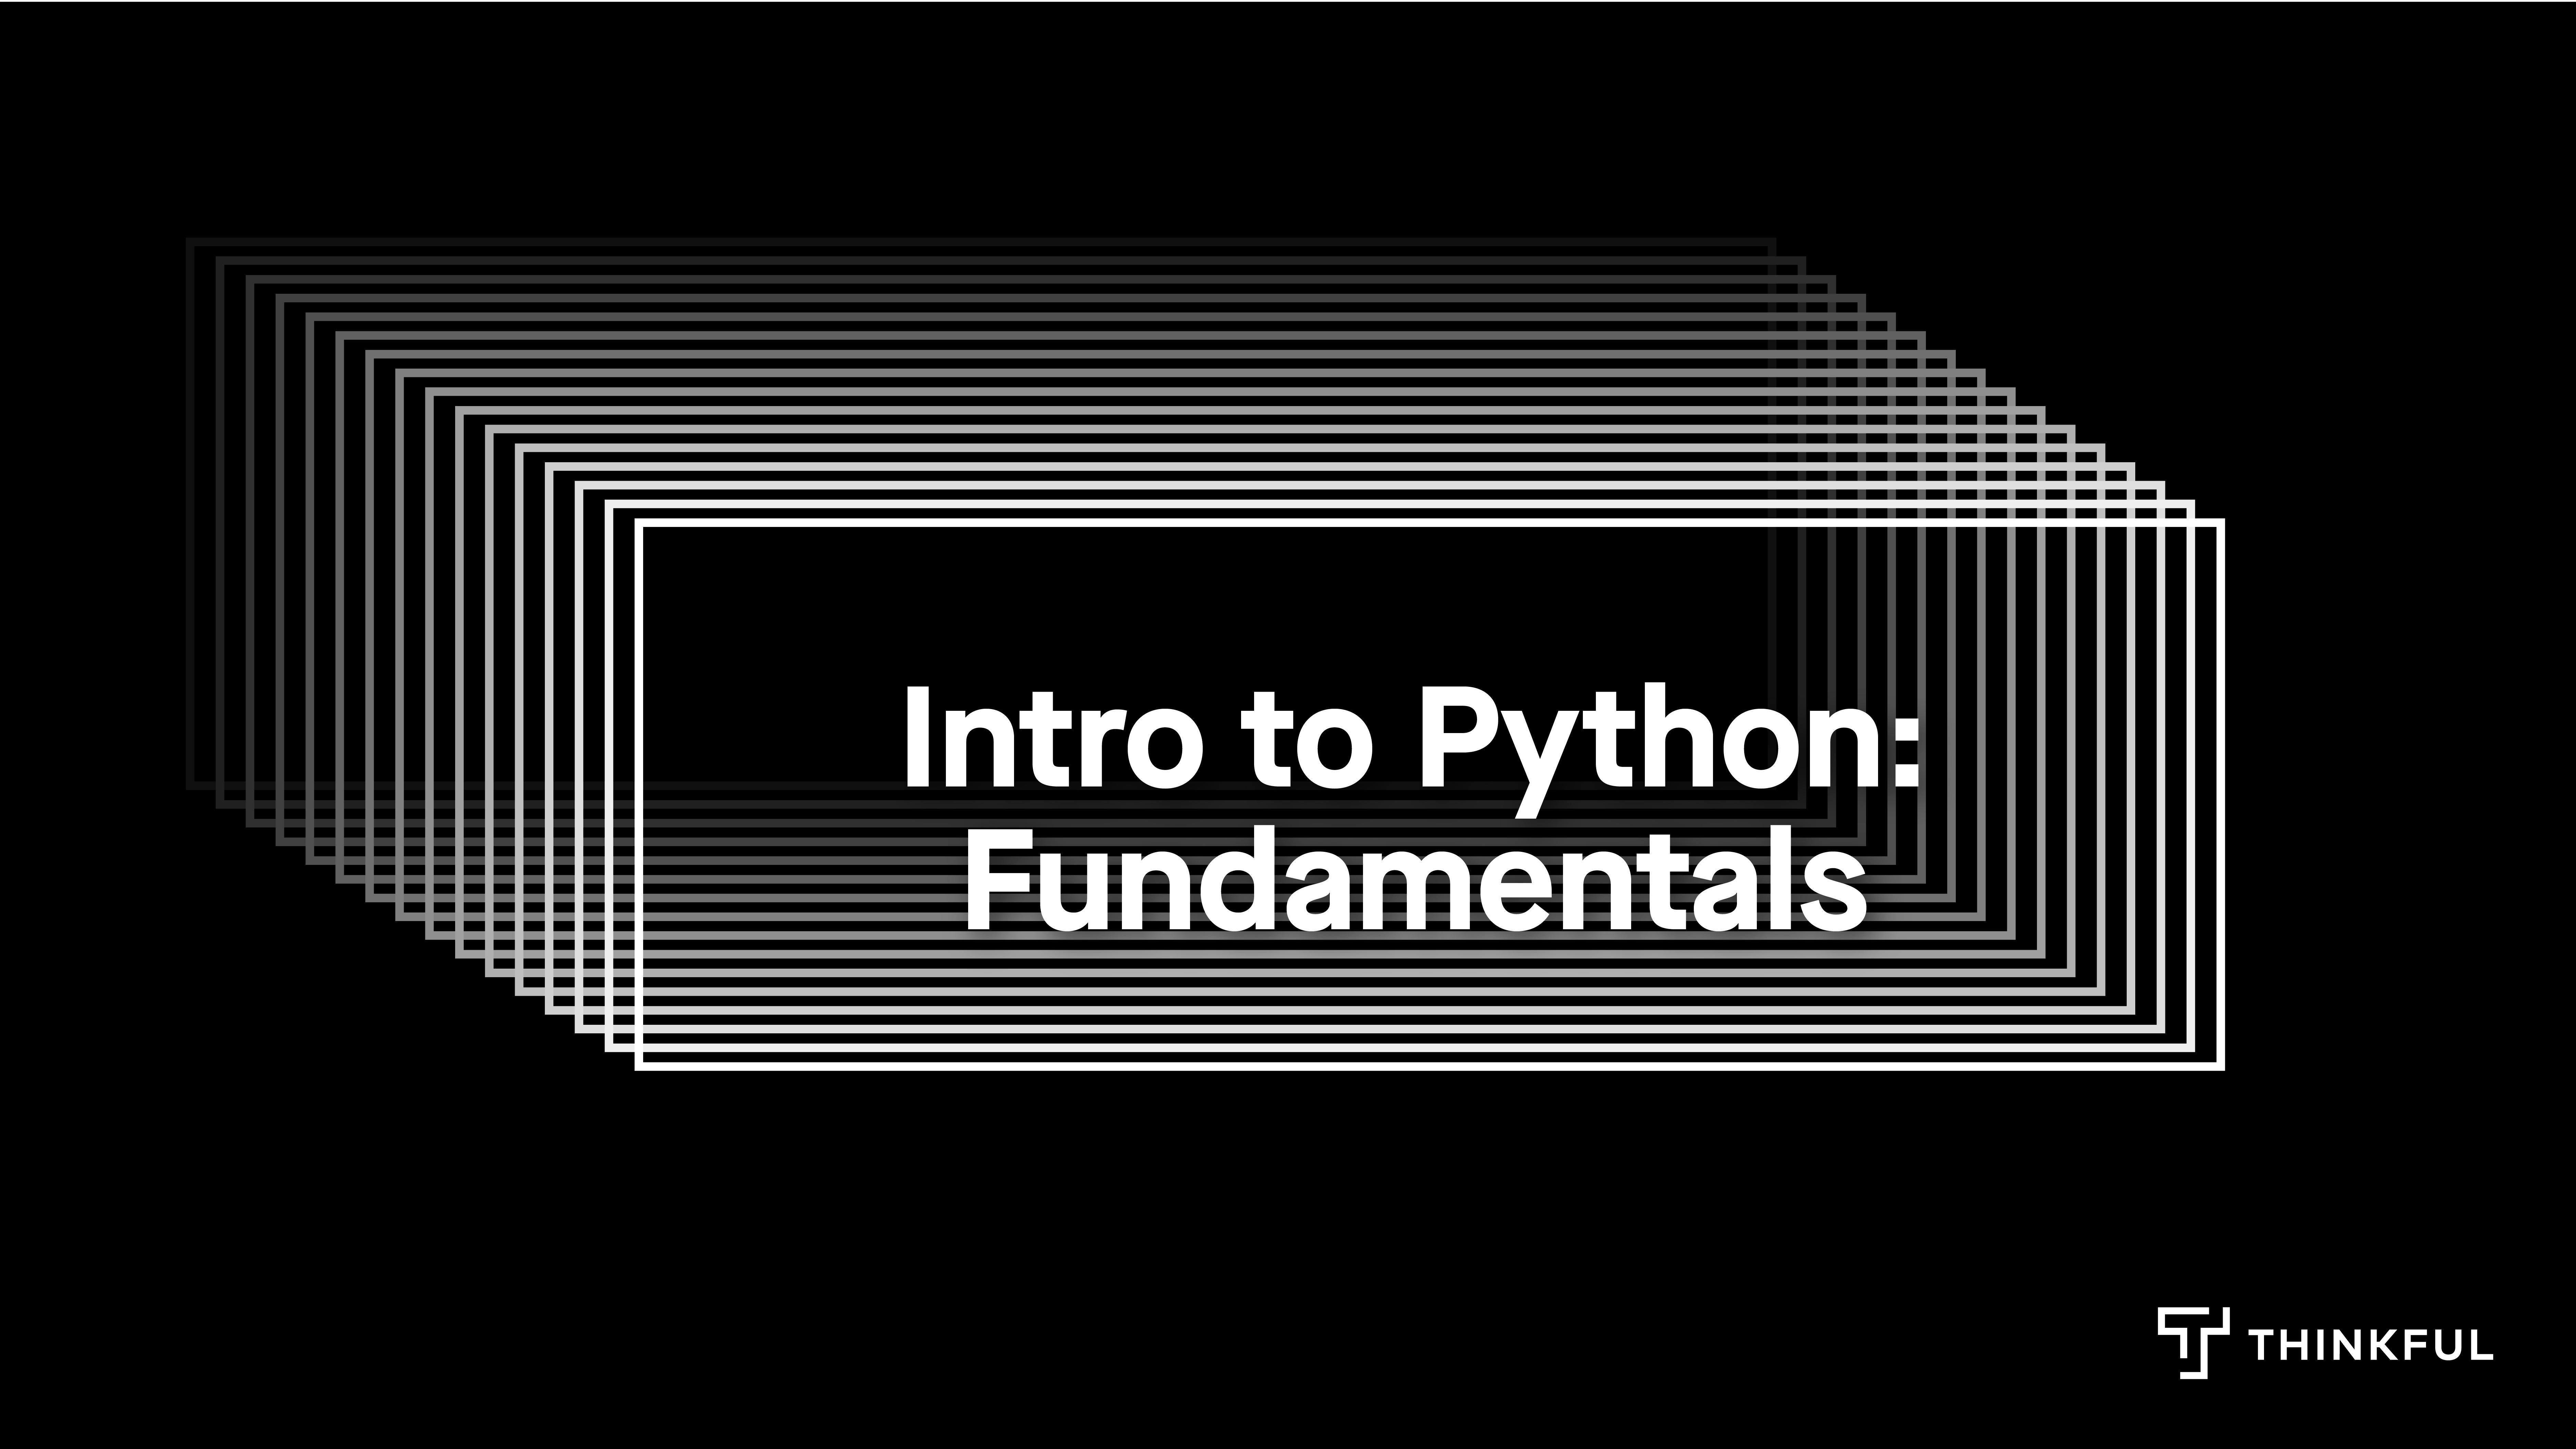 Intro to Python: Fundamentals